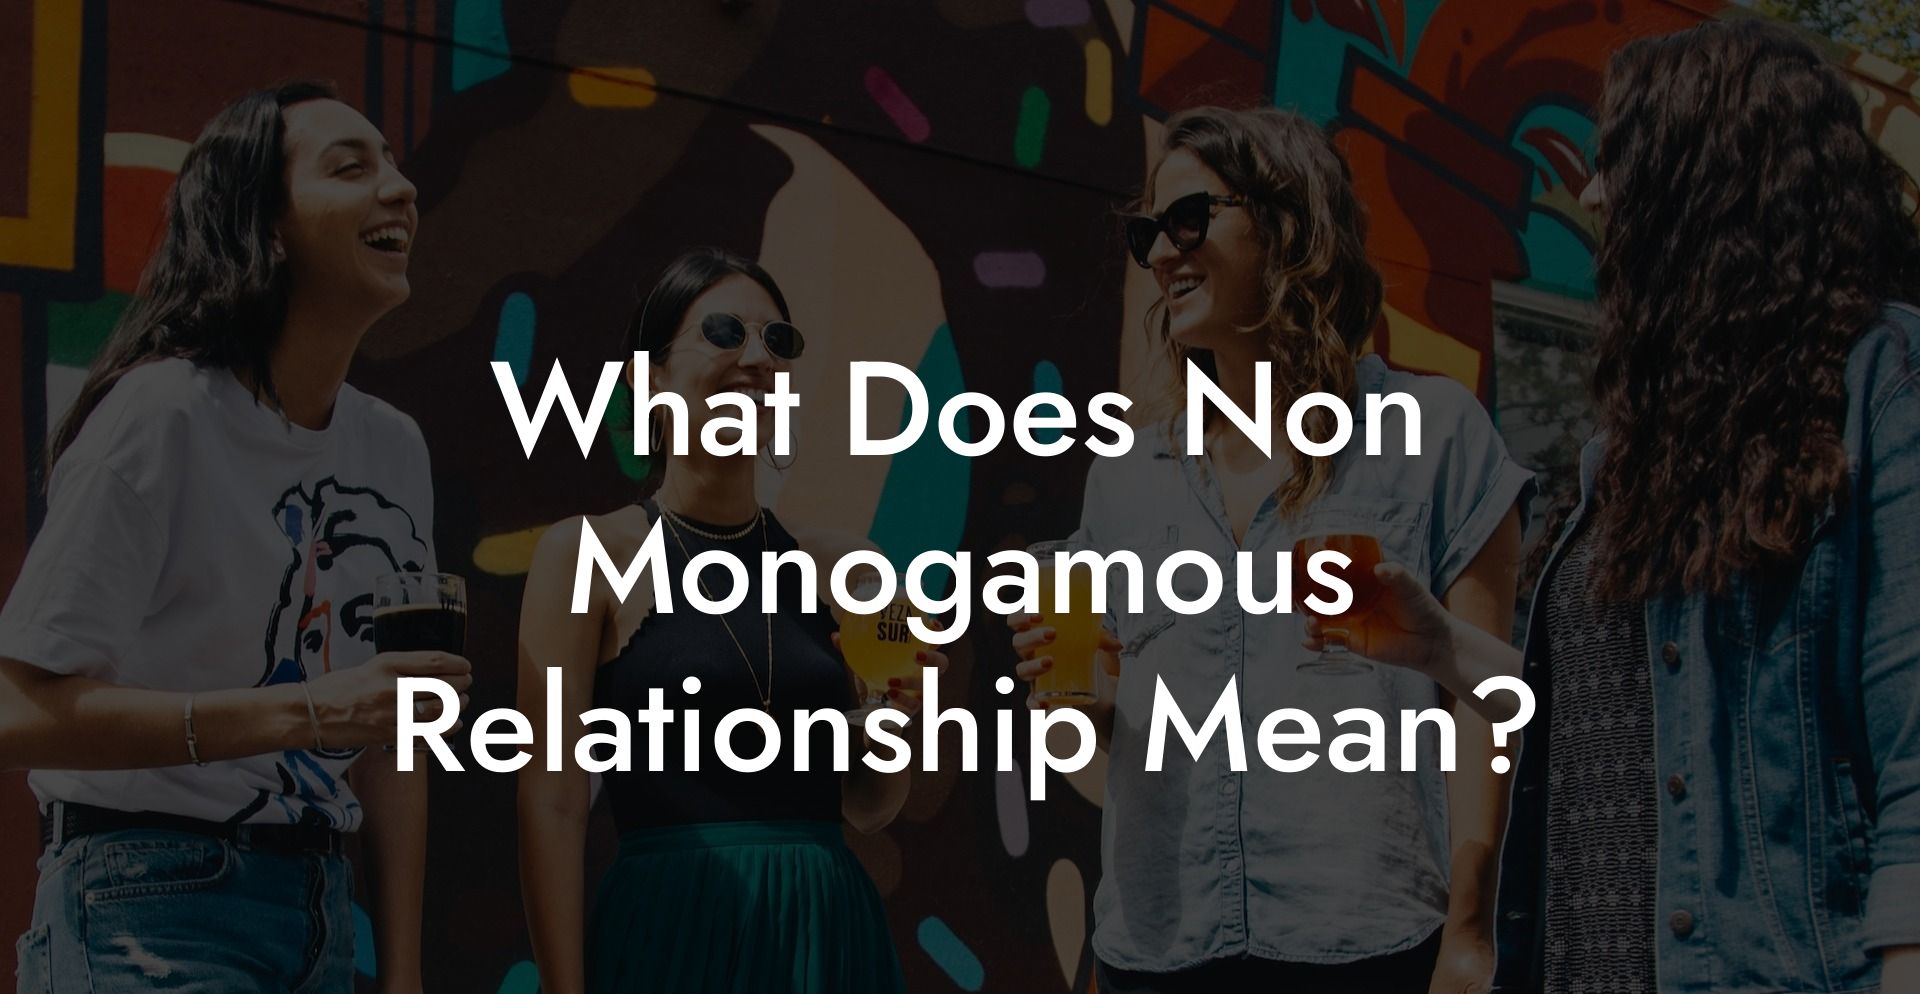 What Does Non Monogamous Relationship Mean?